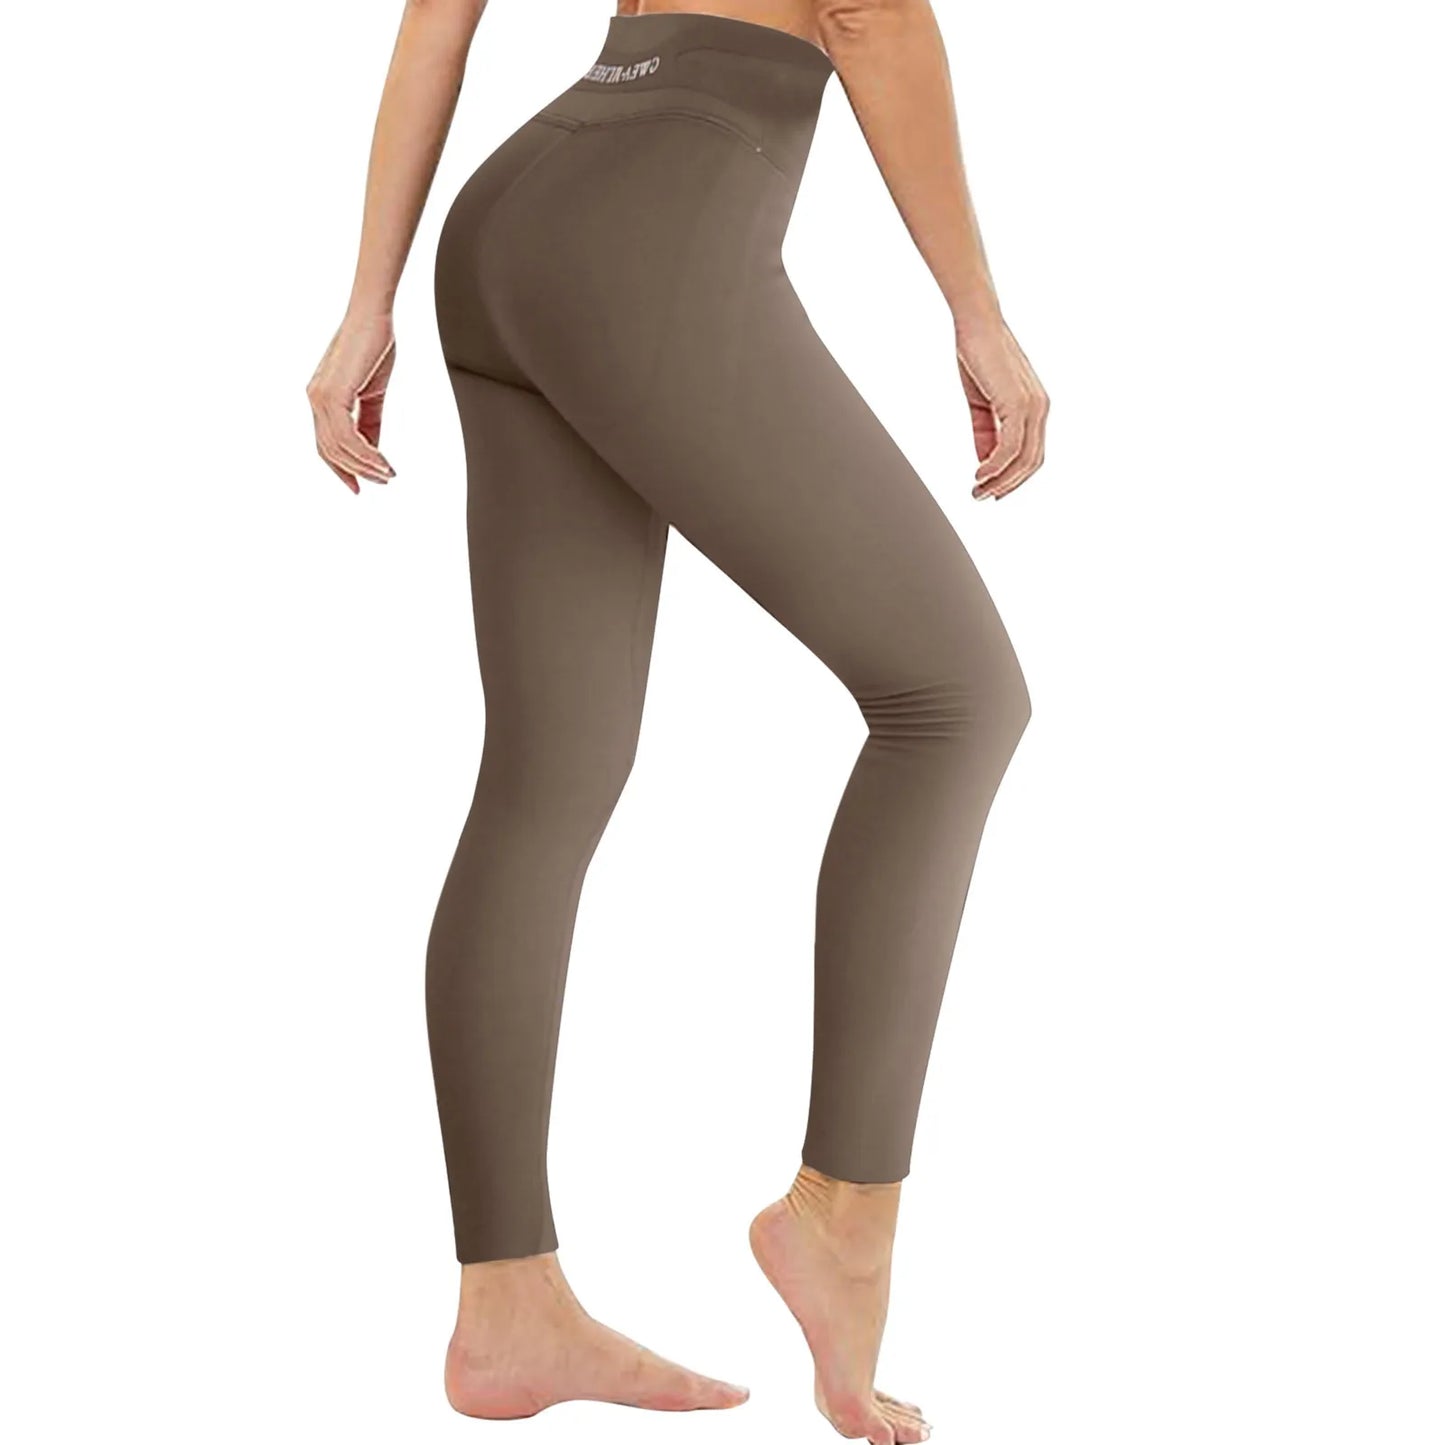 Women Hip Lift Elastic High Waist Seamless Leggings/Gym Fitness Running Workout Sports Yoga Pants S-2XL Size